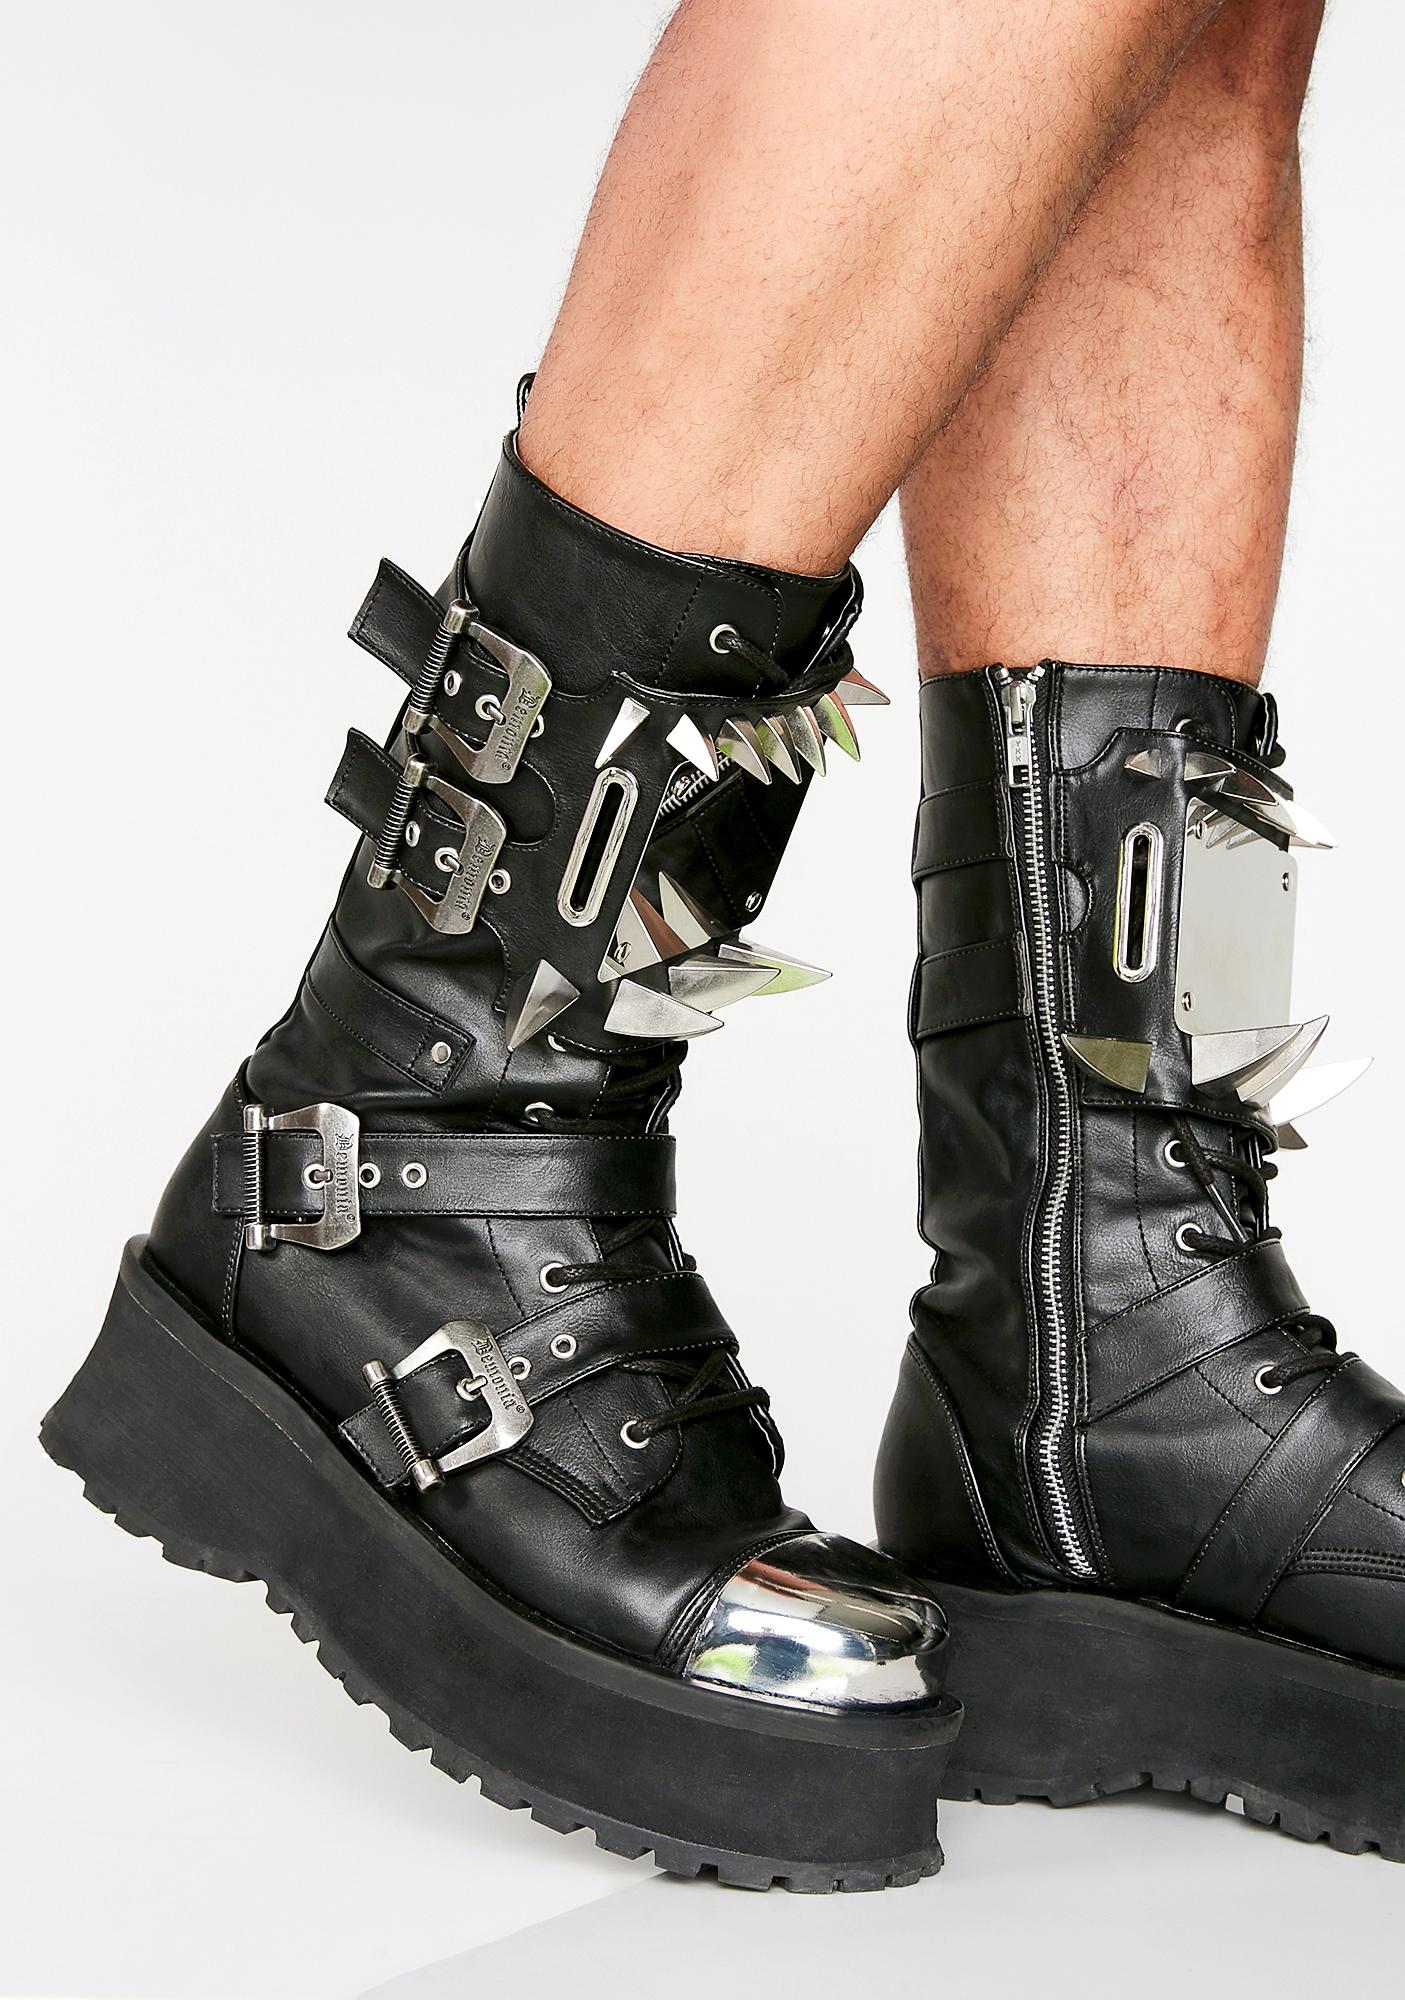 mens goth platform boots